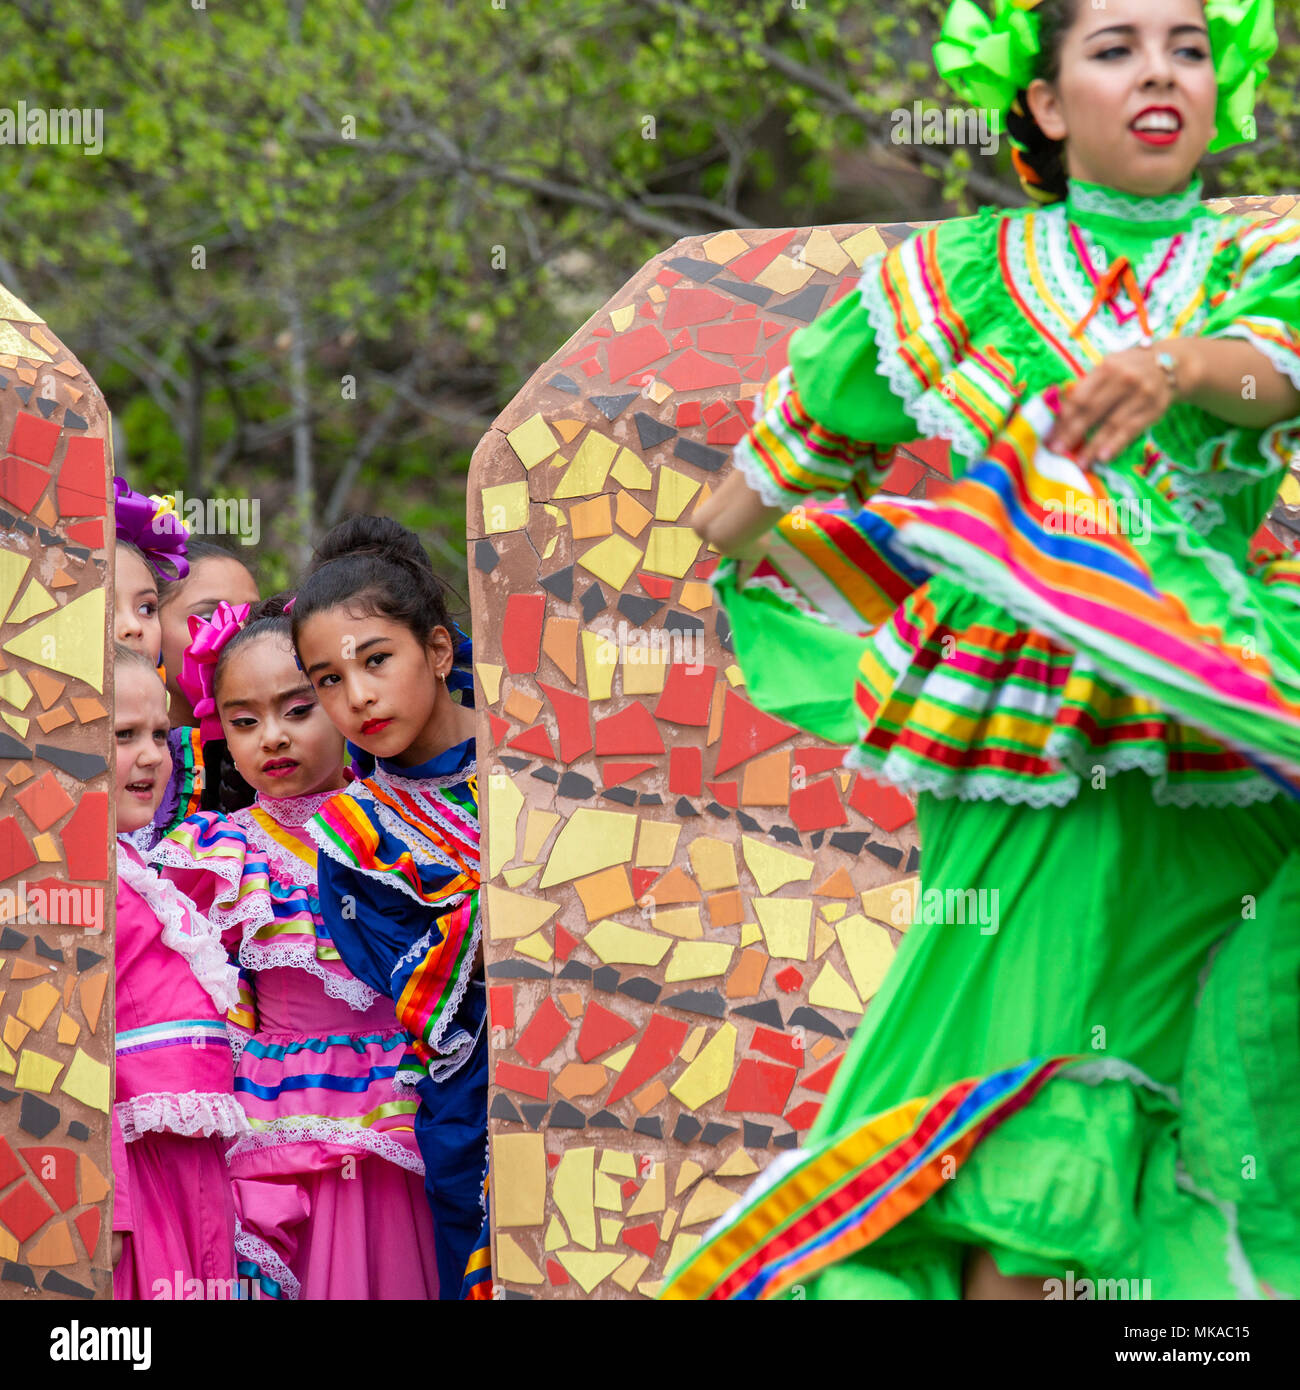 Children perform folkloric dances Chinco de Mayo festival Stock Photo -  Alamy